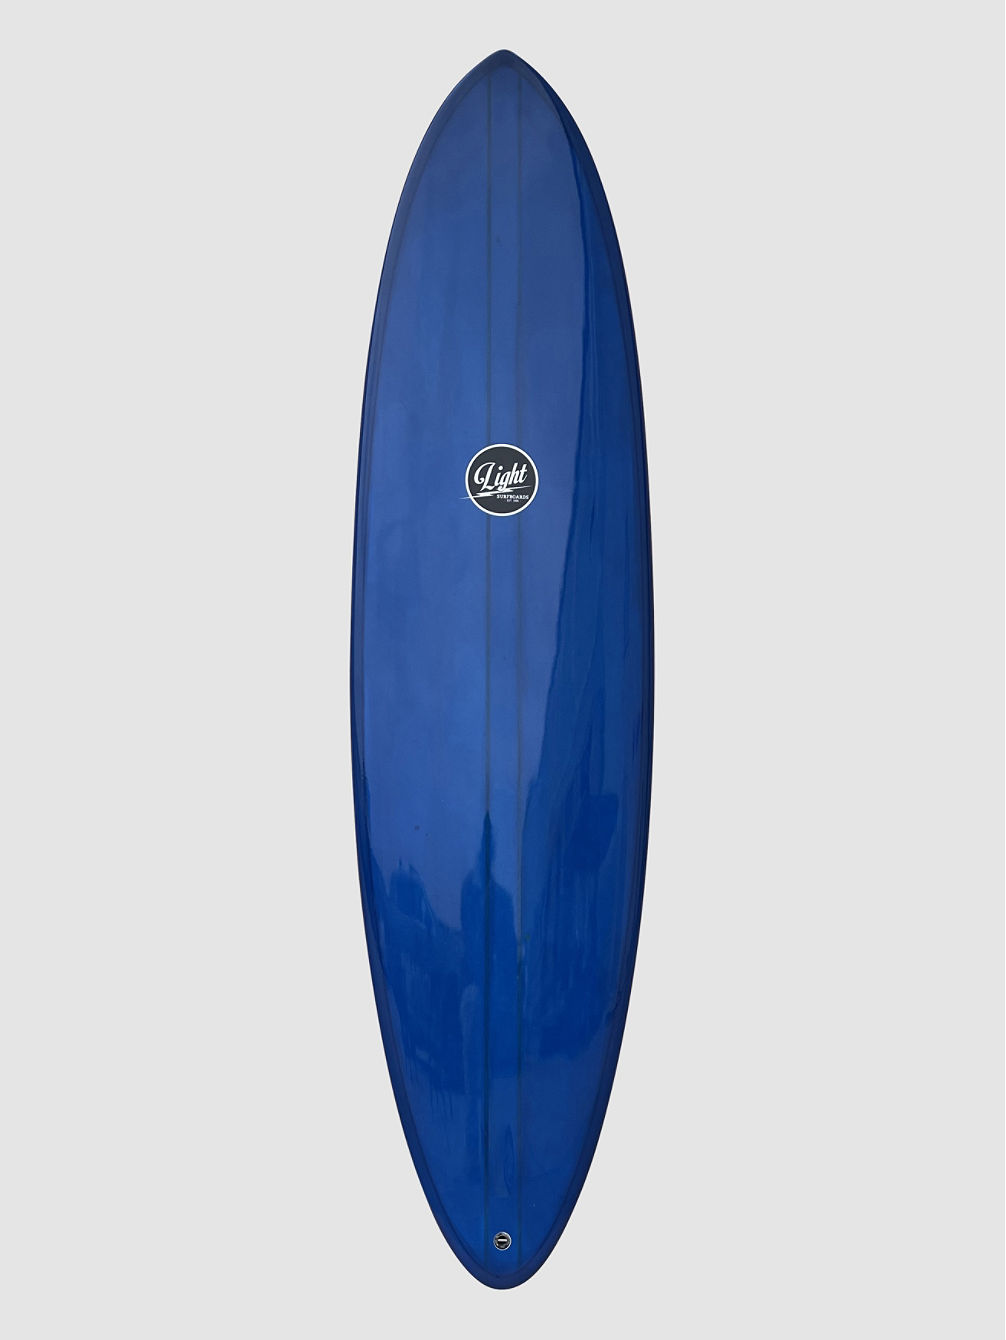 Wide Glider Blue - PU - US + Future  8-5 Prancha de Surf